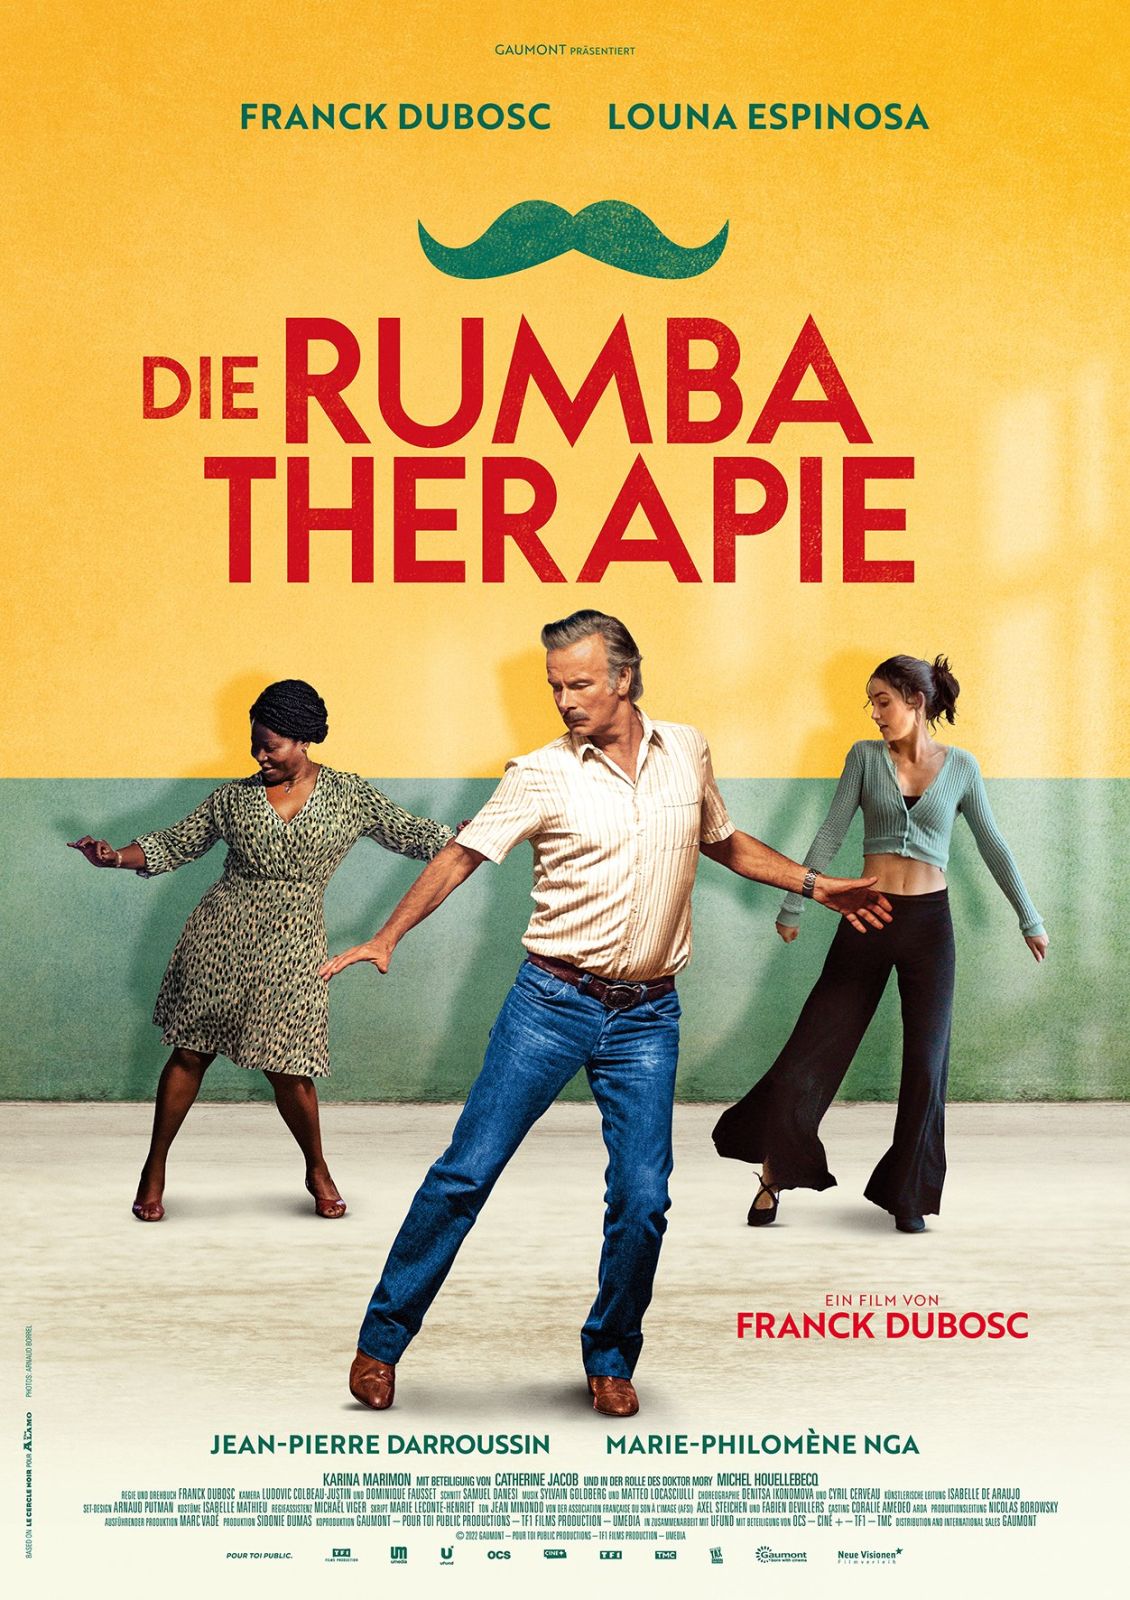 Plakat „Die Rumba-Therapie“. 